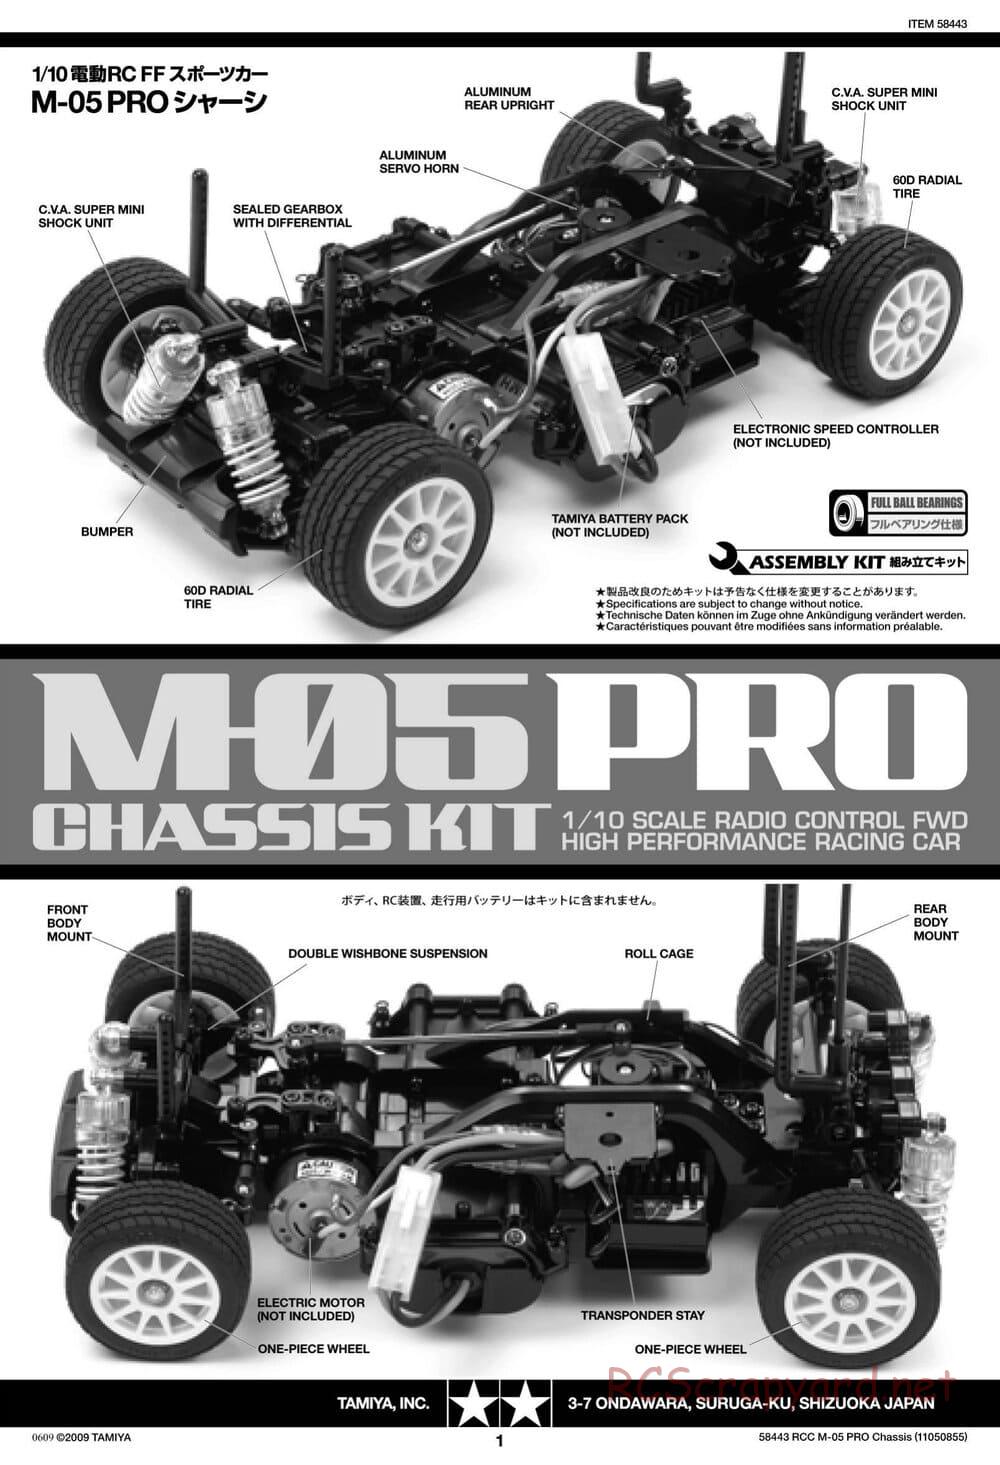 Tamiya - M05-Pro Chassis - Manual - Page 1